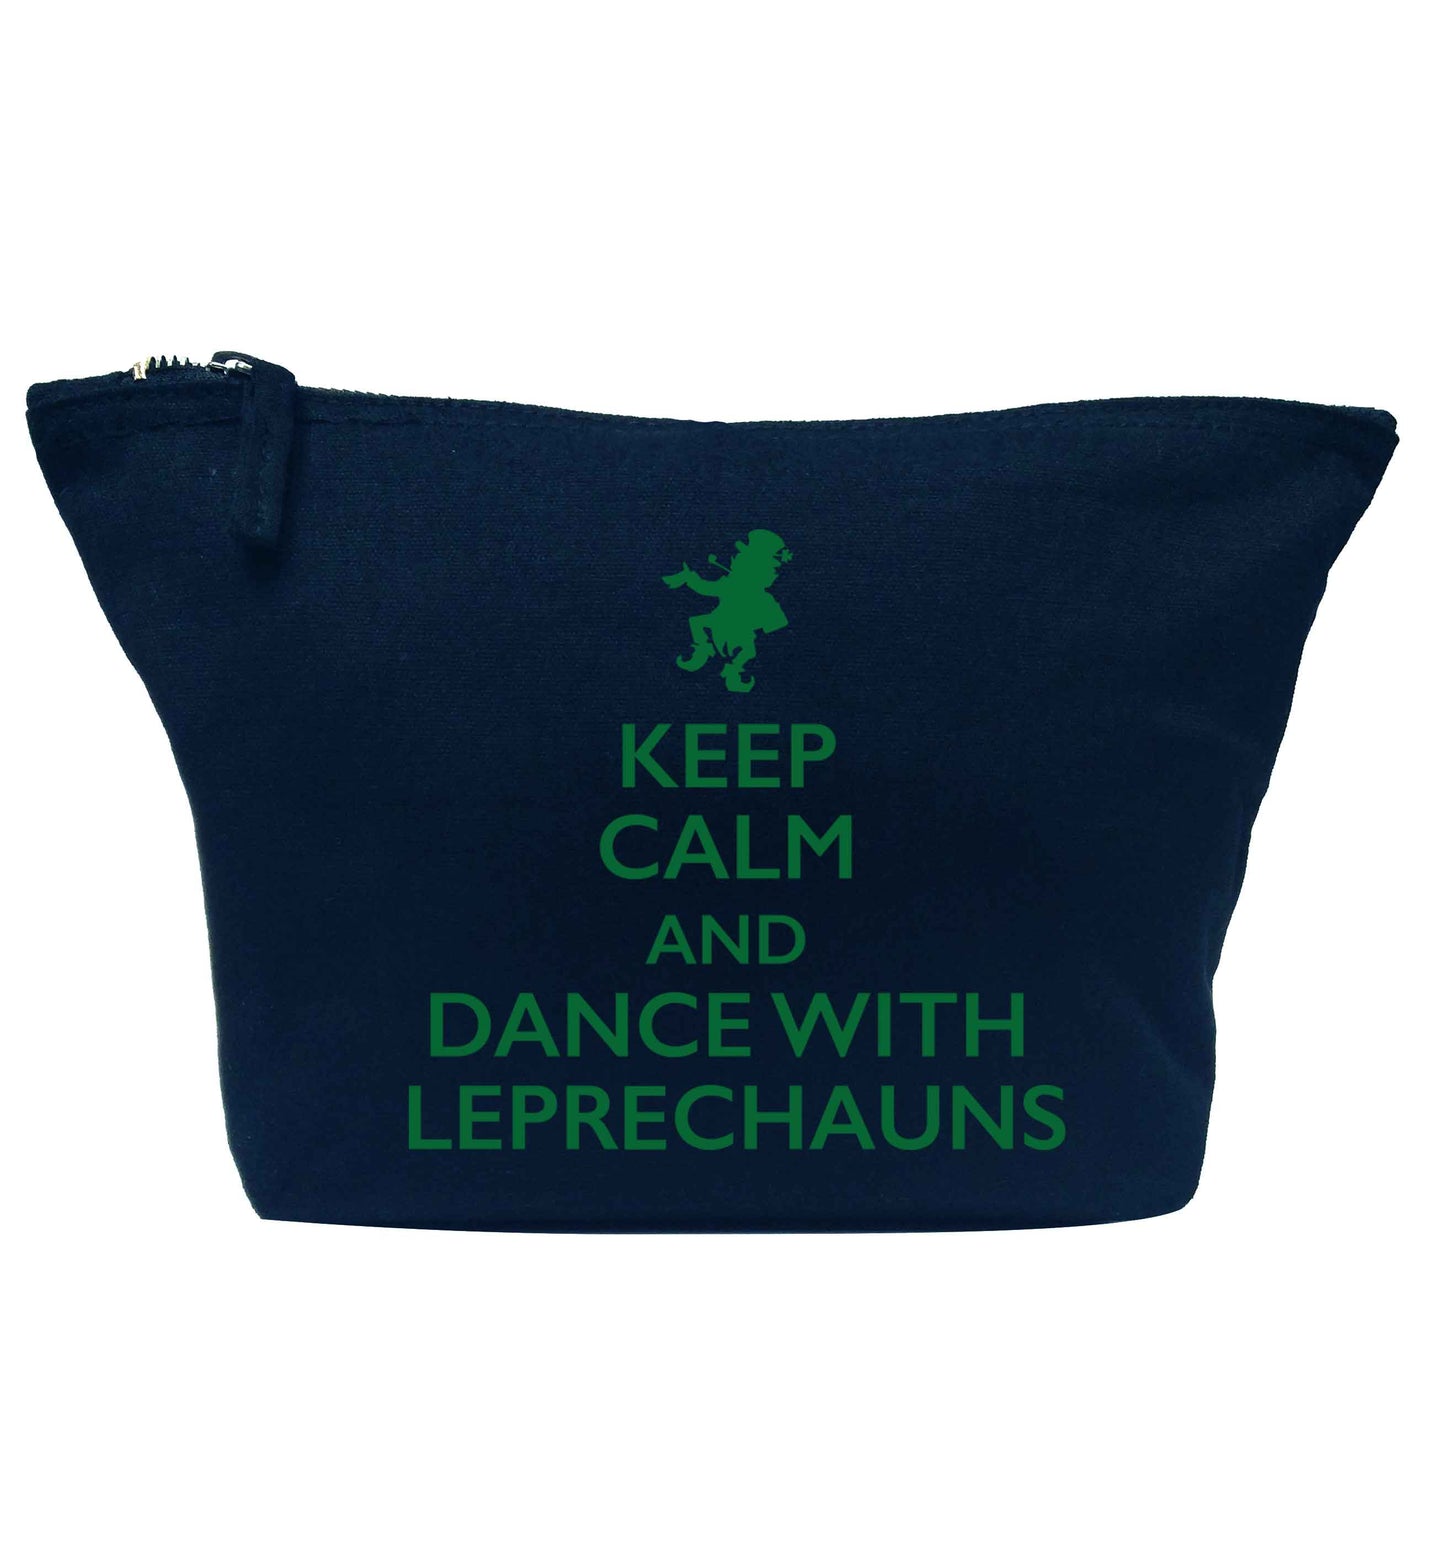 Keep calm and dance with leprechauns navy makeup bag